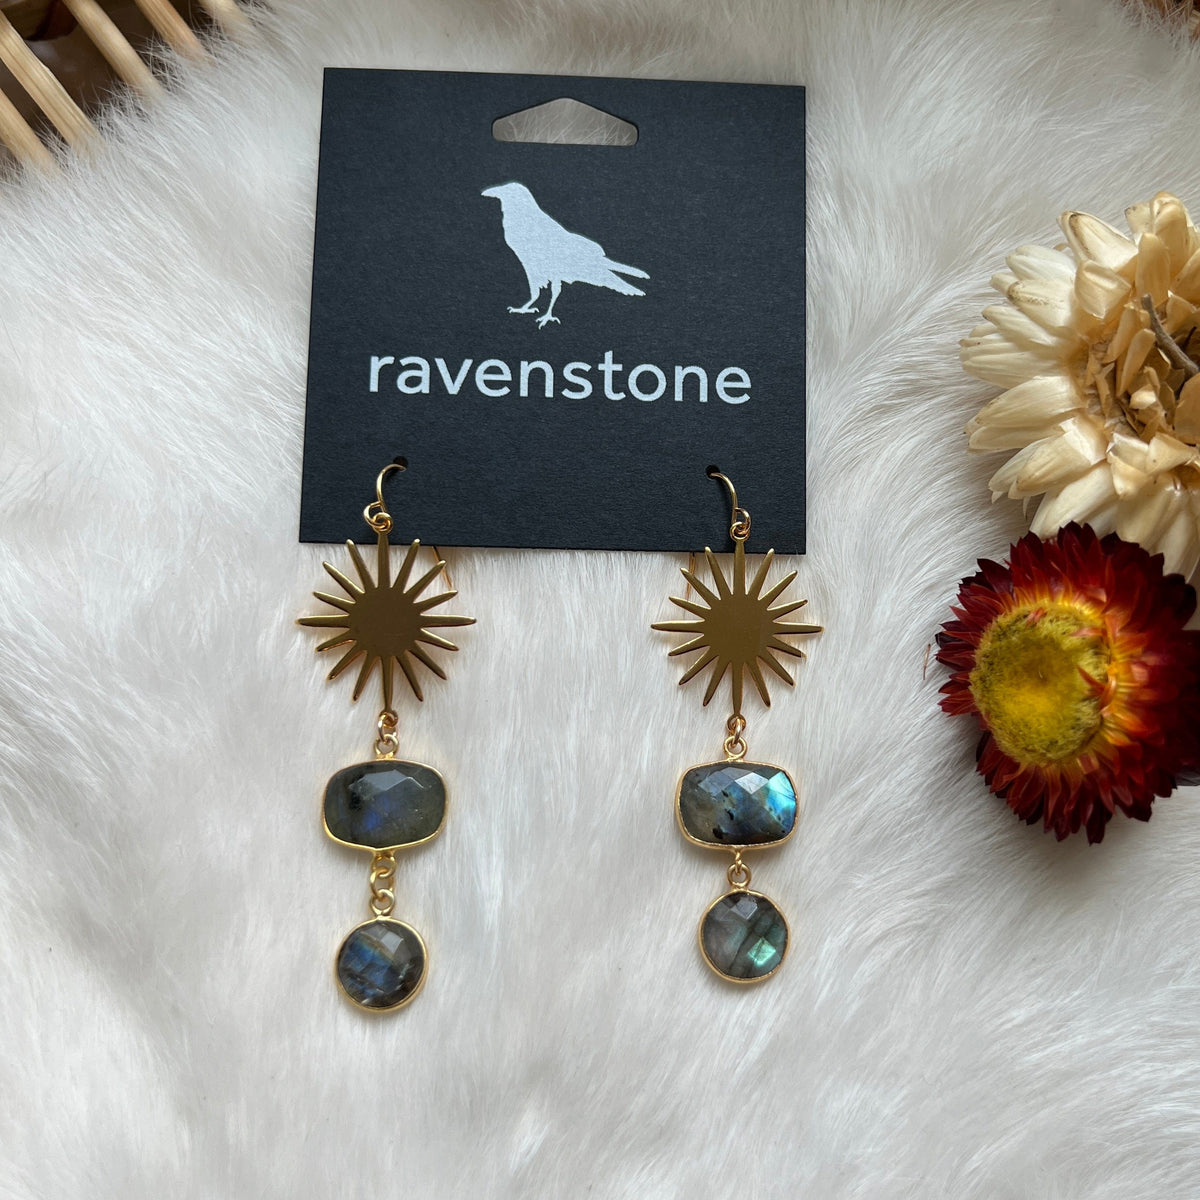 Ravenstone The Labradorite Earrings